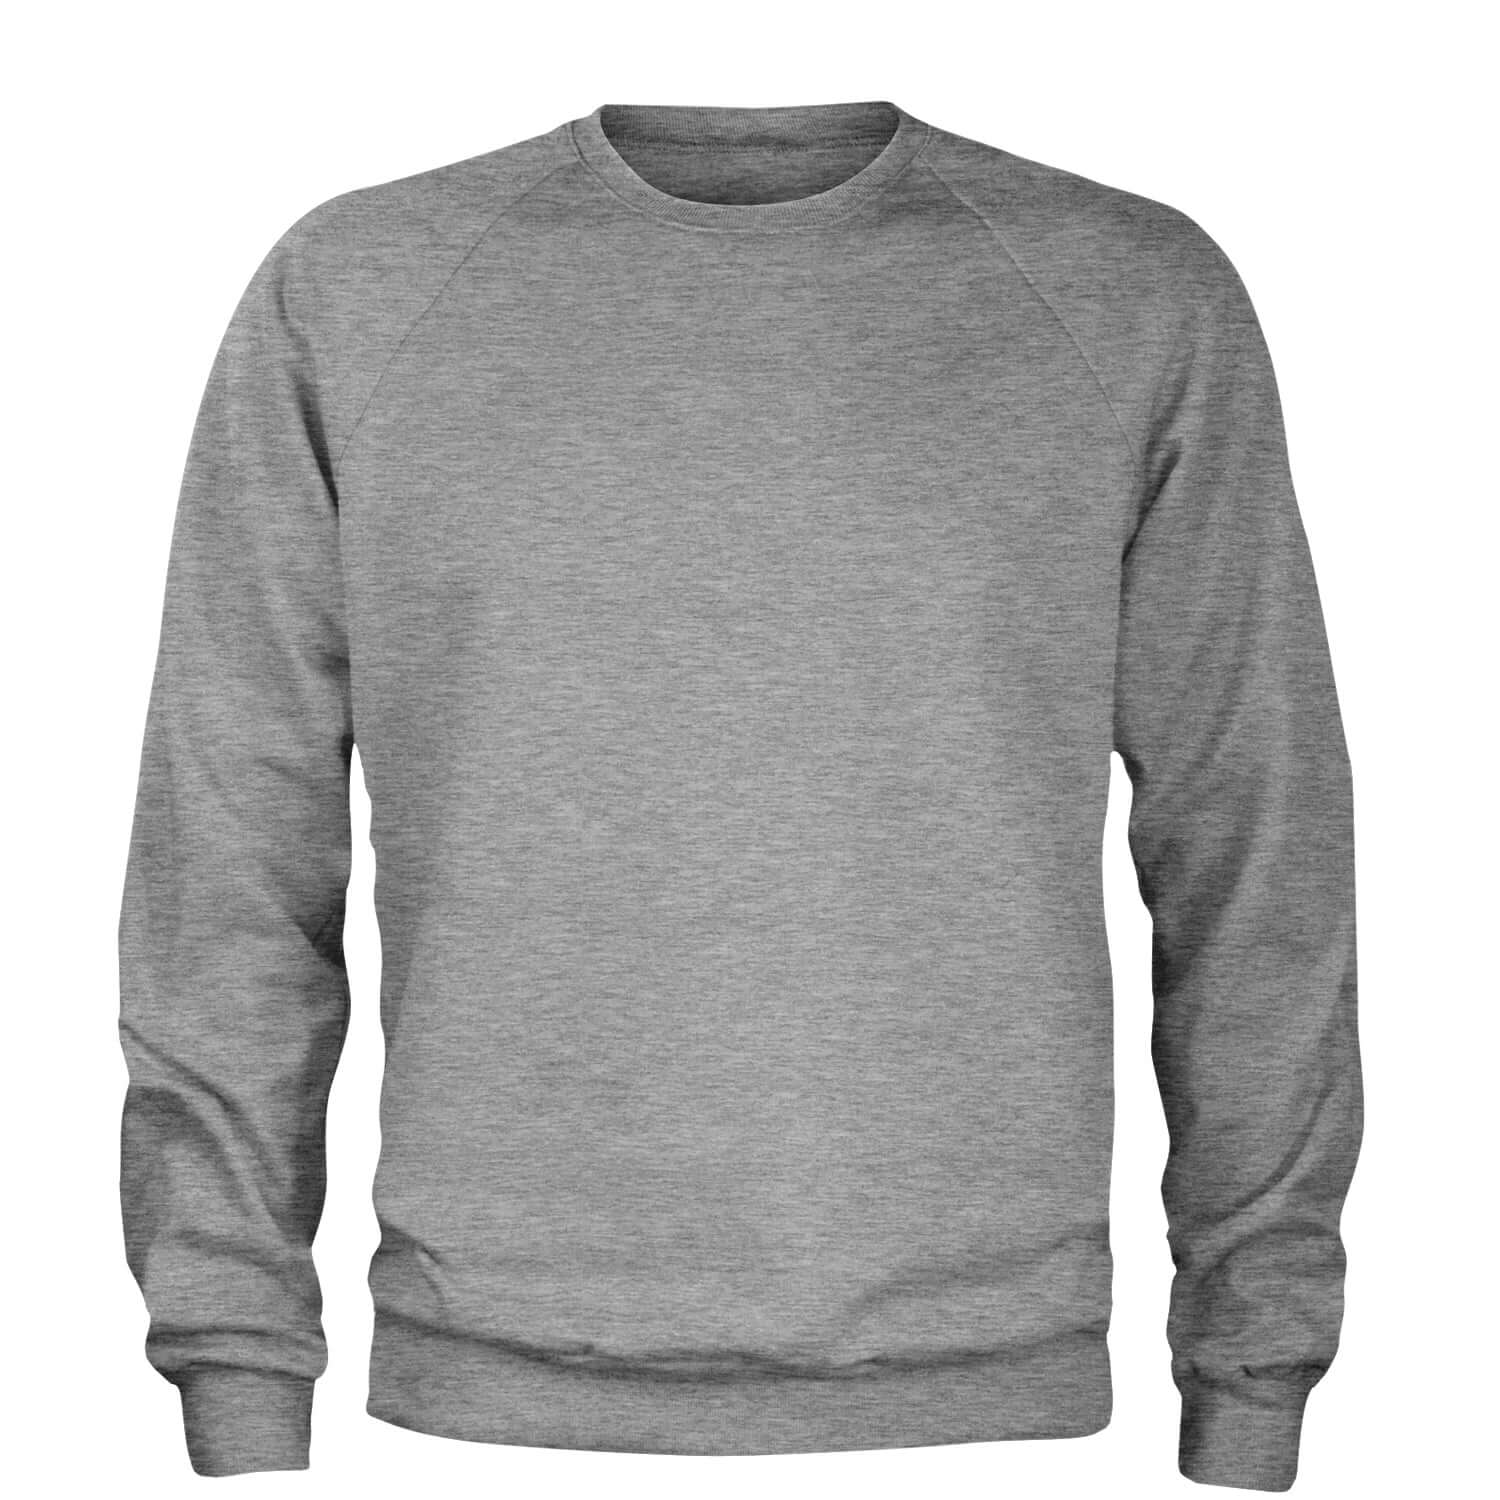 Basics - Plain Blank Adult Crewneck Sweatshirt blank, clothing, plain, tshirts by Expression Tees